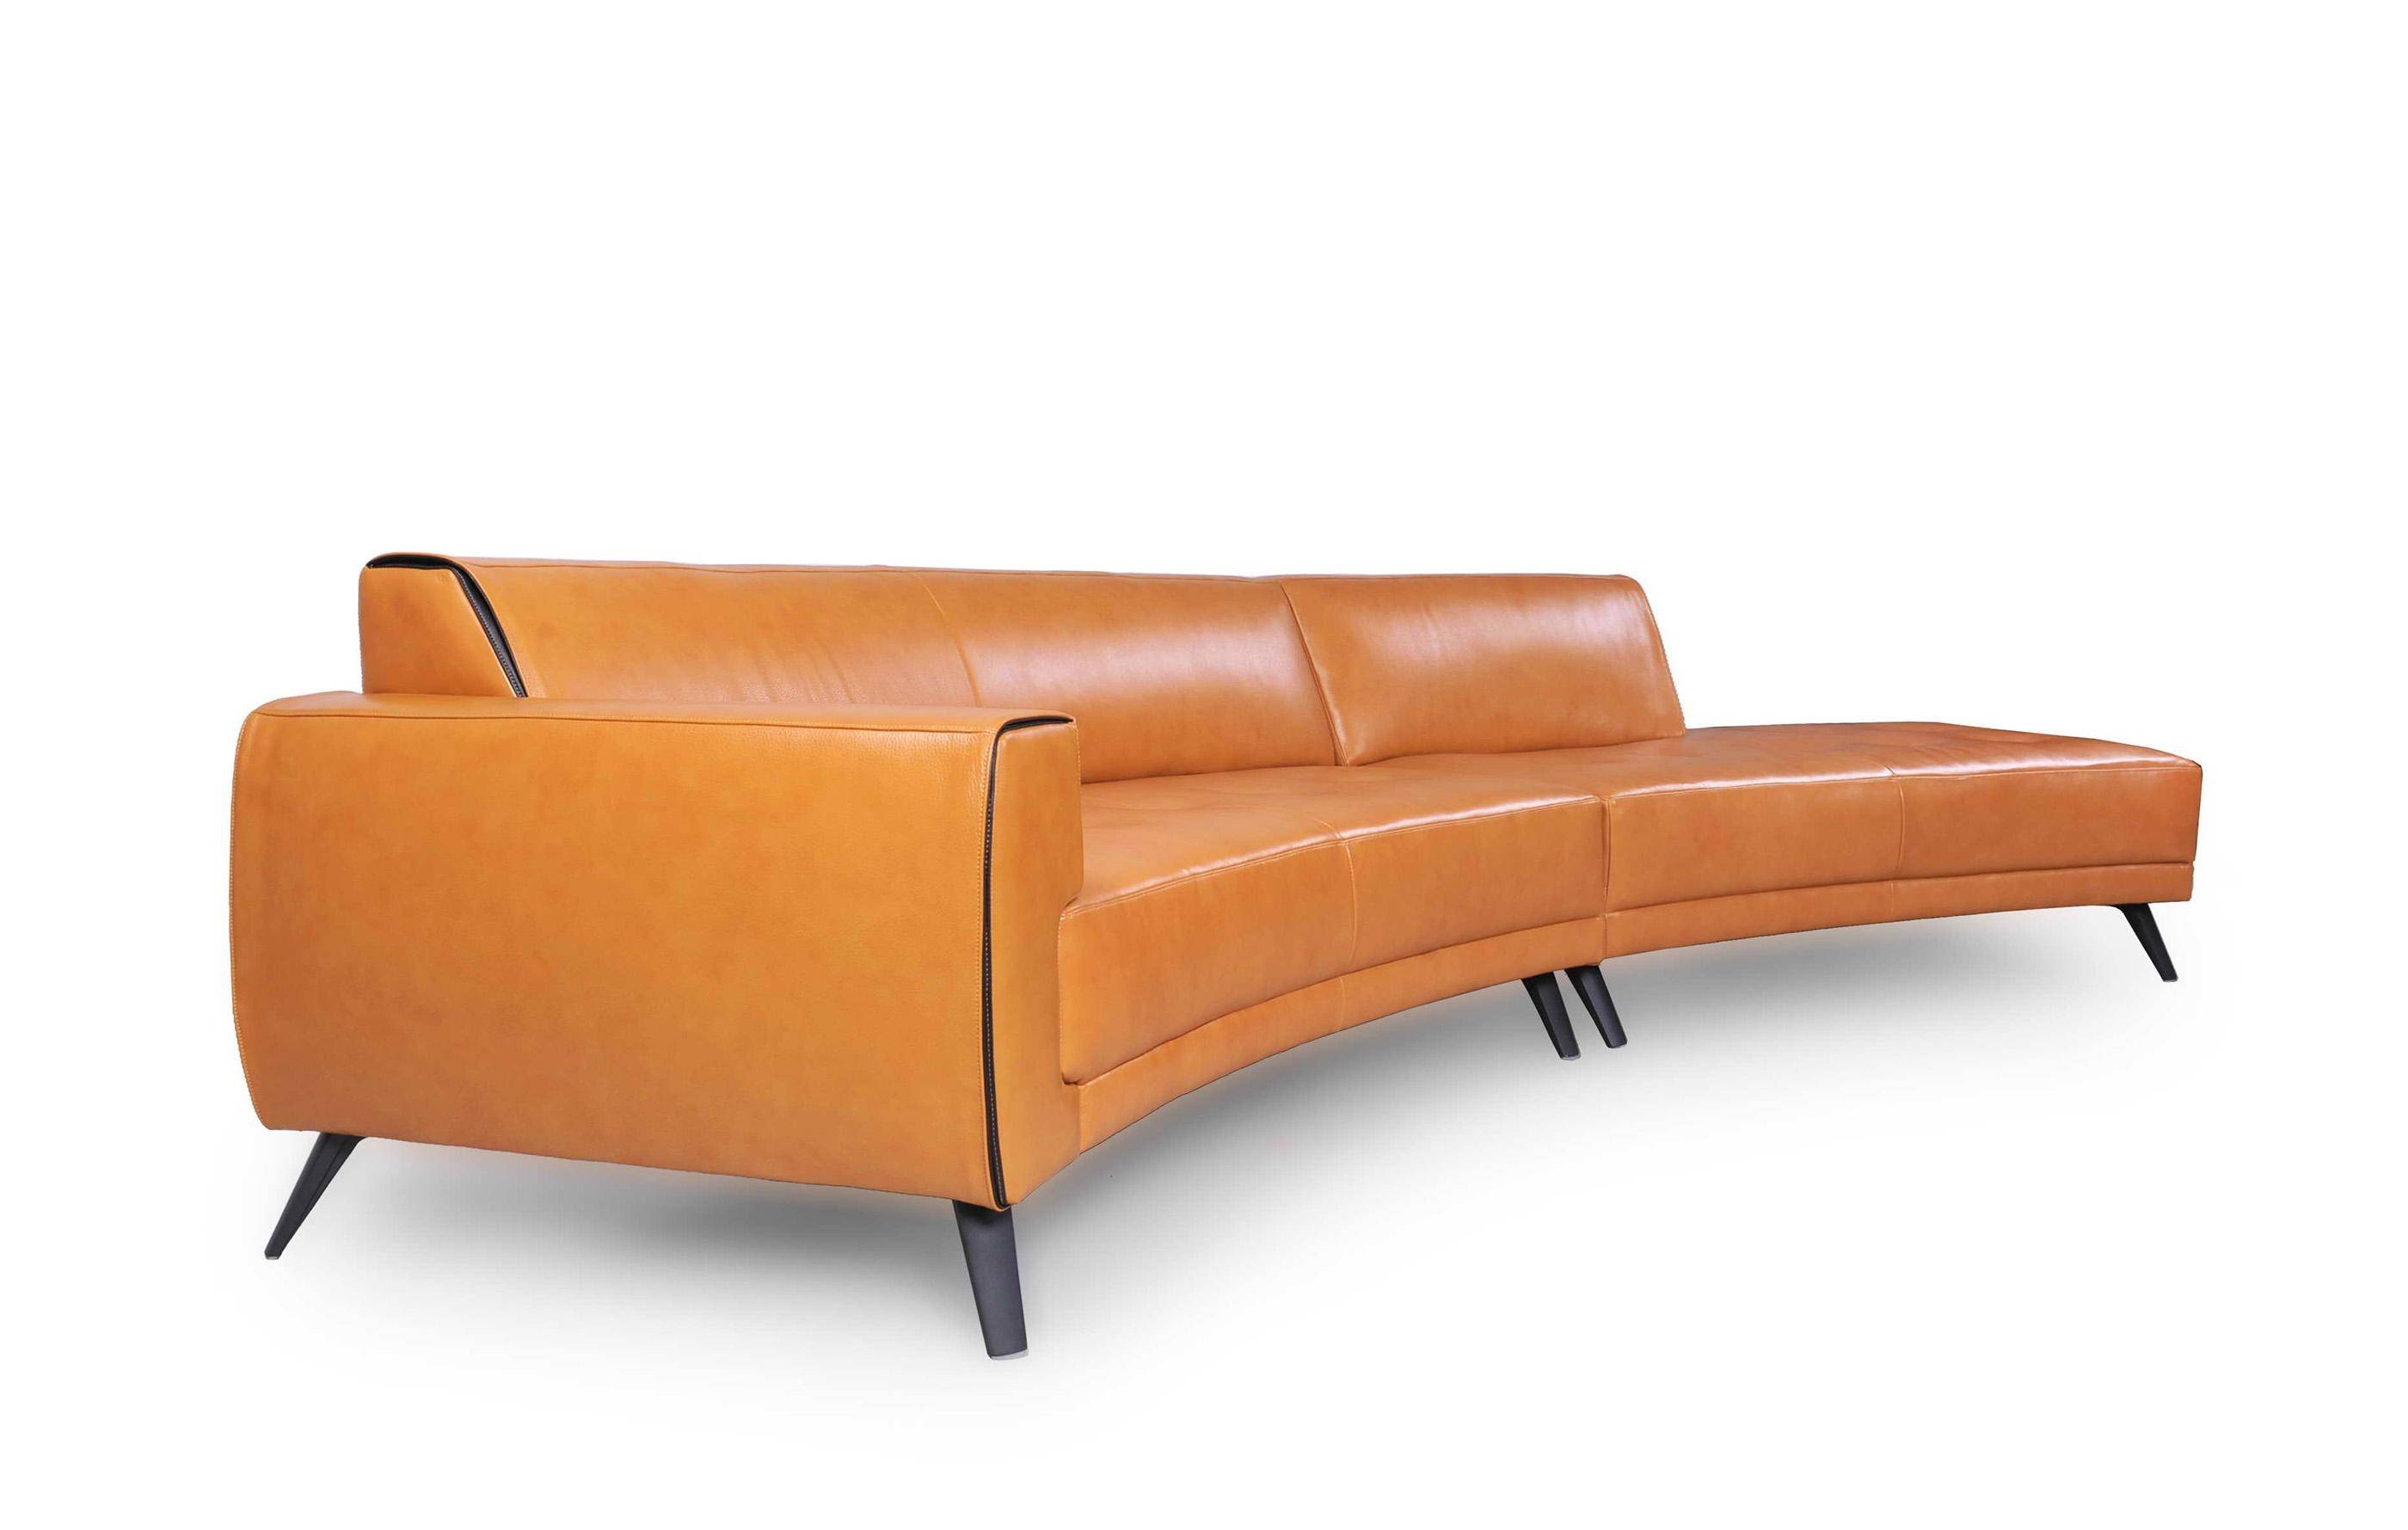 Moroni Casablanca 581 Sectional Sofa, Moroni Leather Furniture